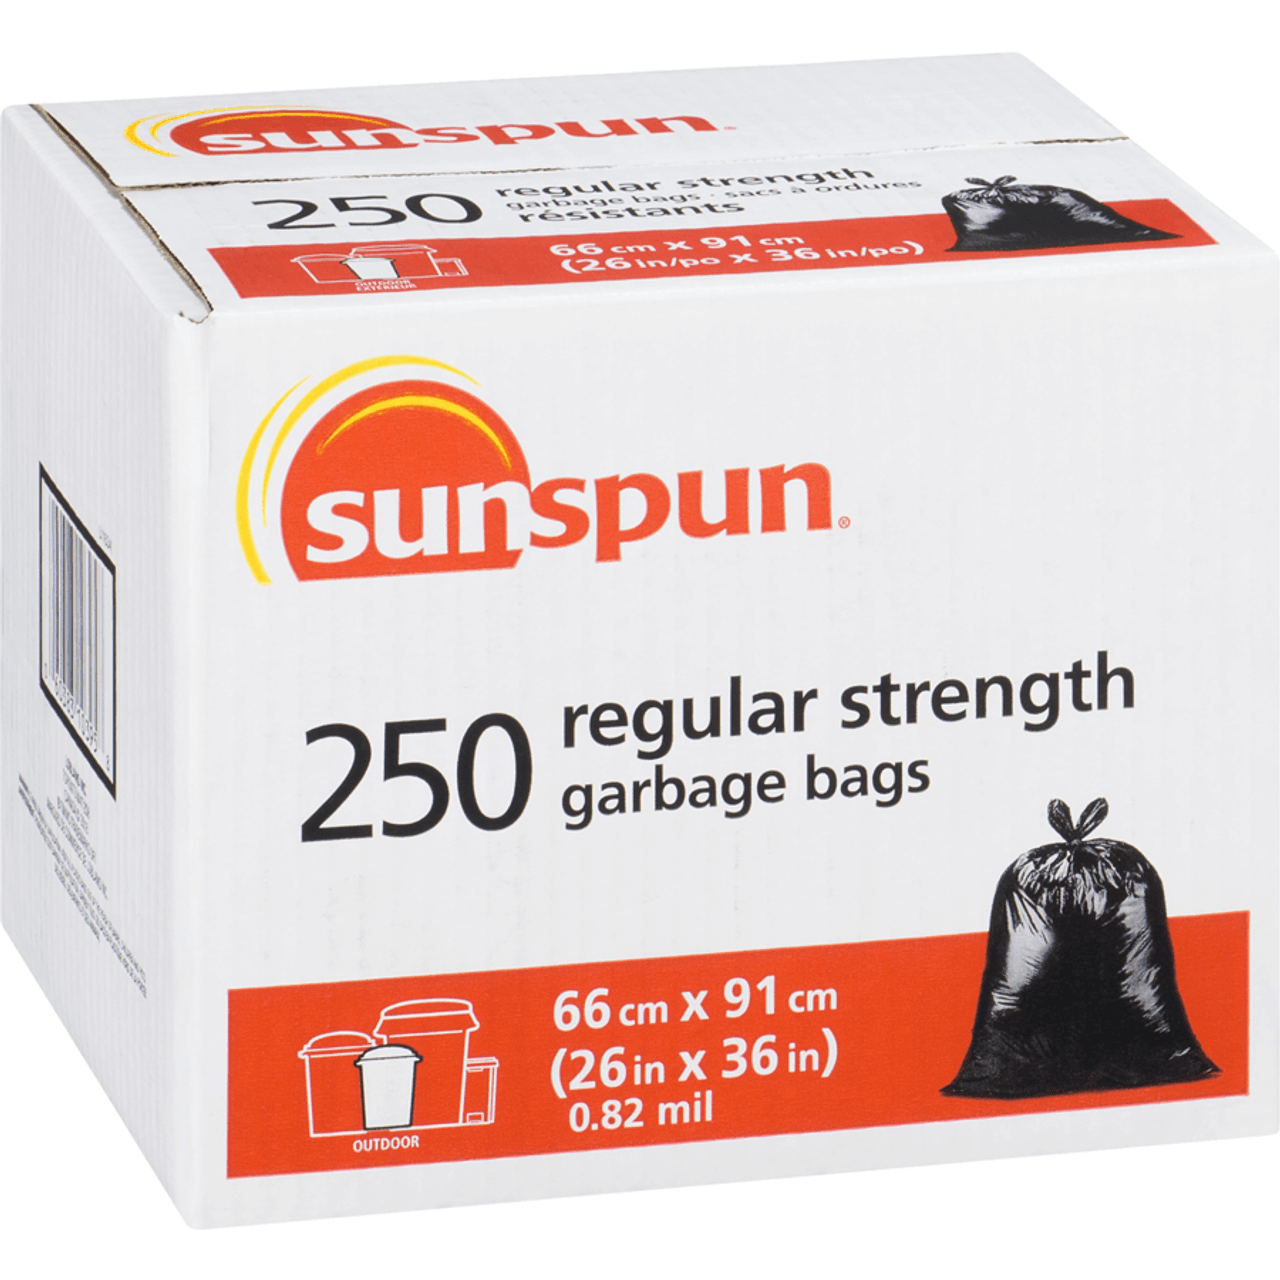 SUNSPUN Outdoor Regular Strength Garbage Bags - 250 Bags(8/Case)-Chicken Pieces